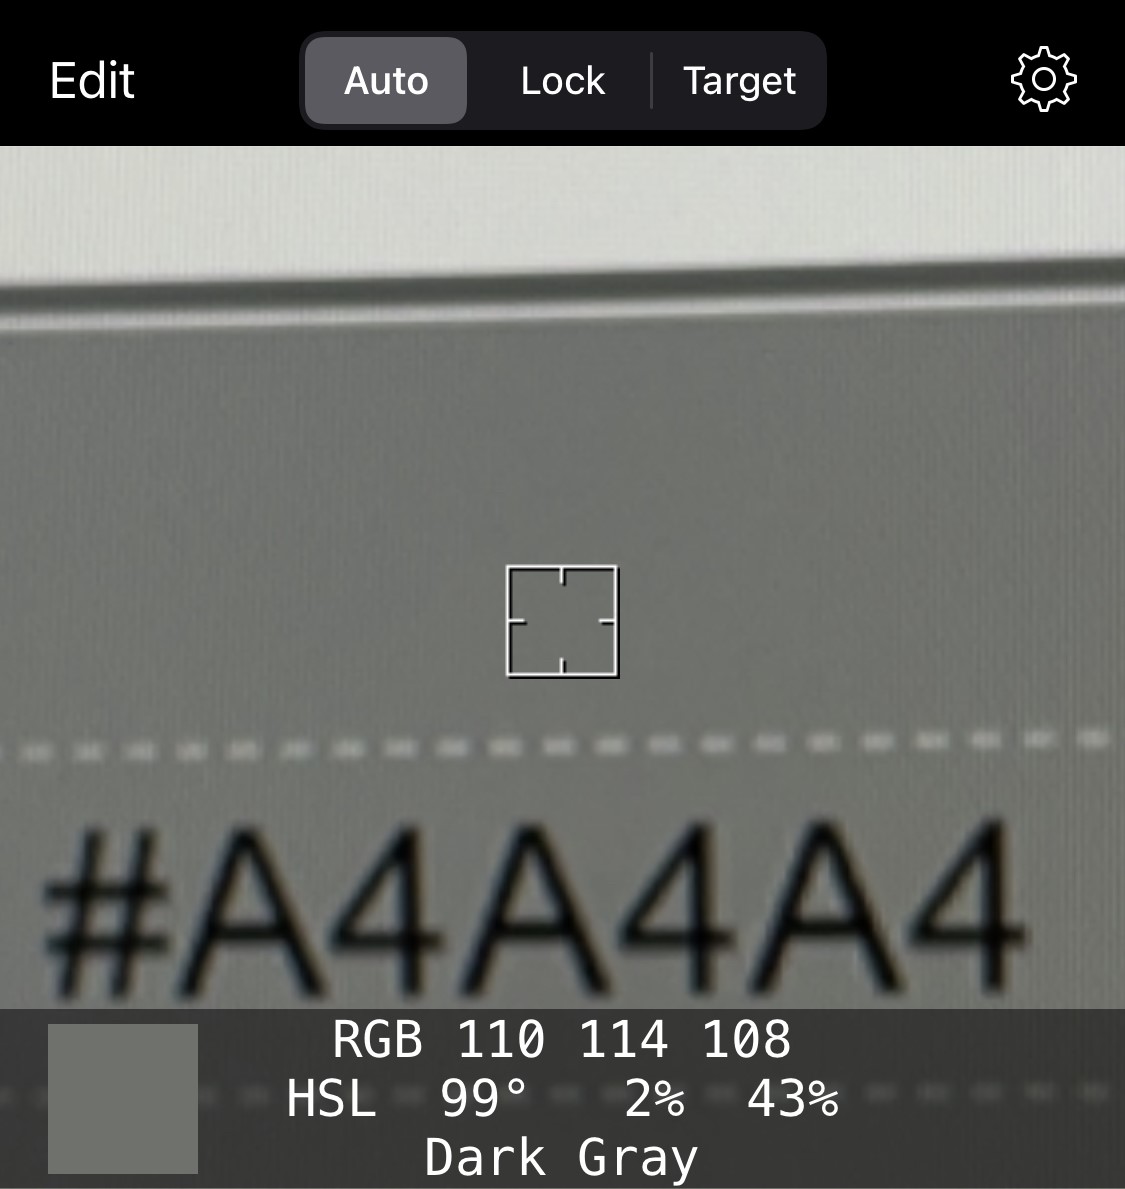 #a4a4a4 회색 배경 카메라 초점 고정됨 RGB 110 114 108, HSL 99 2 43, Dark gray